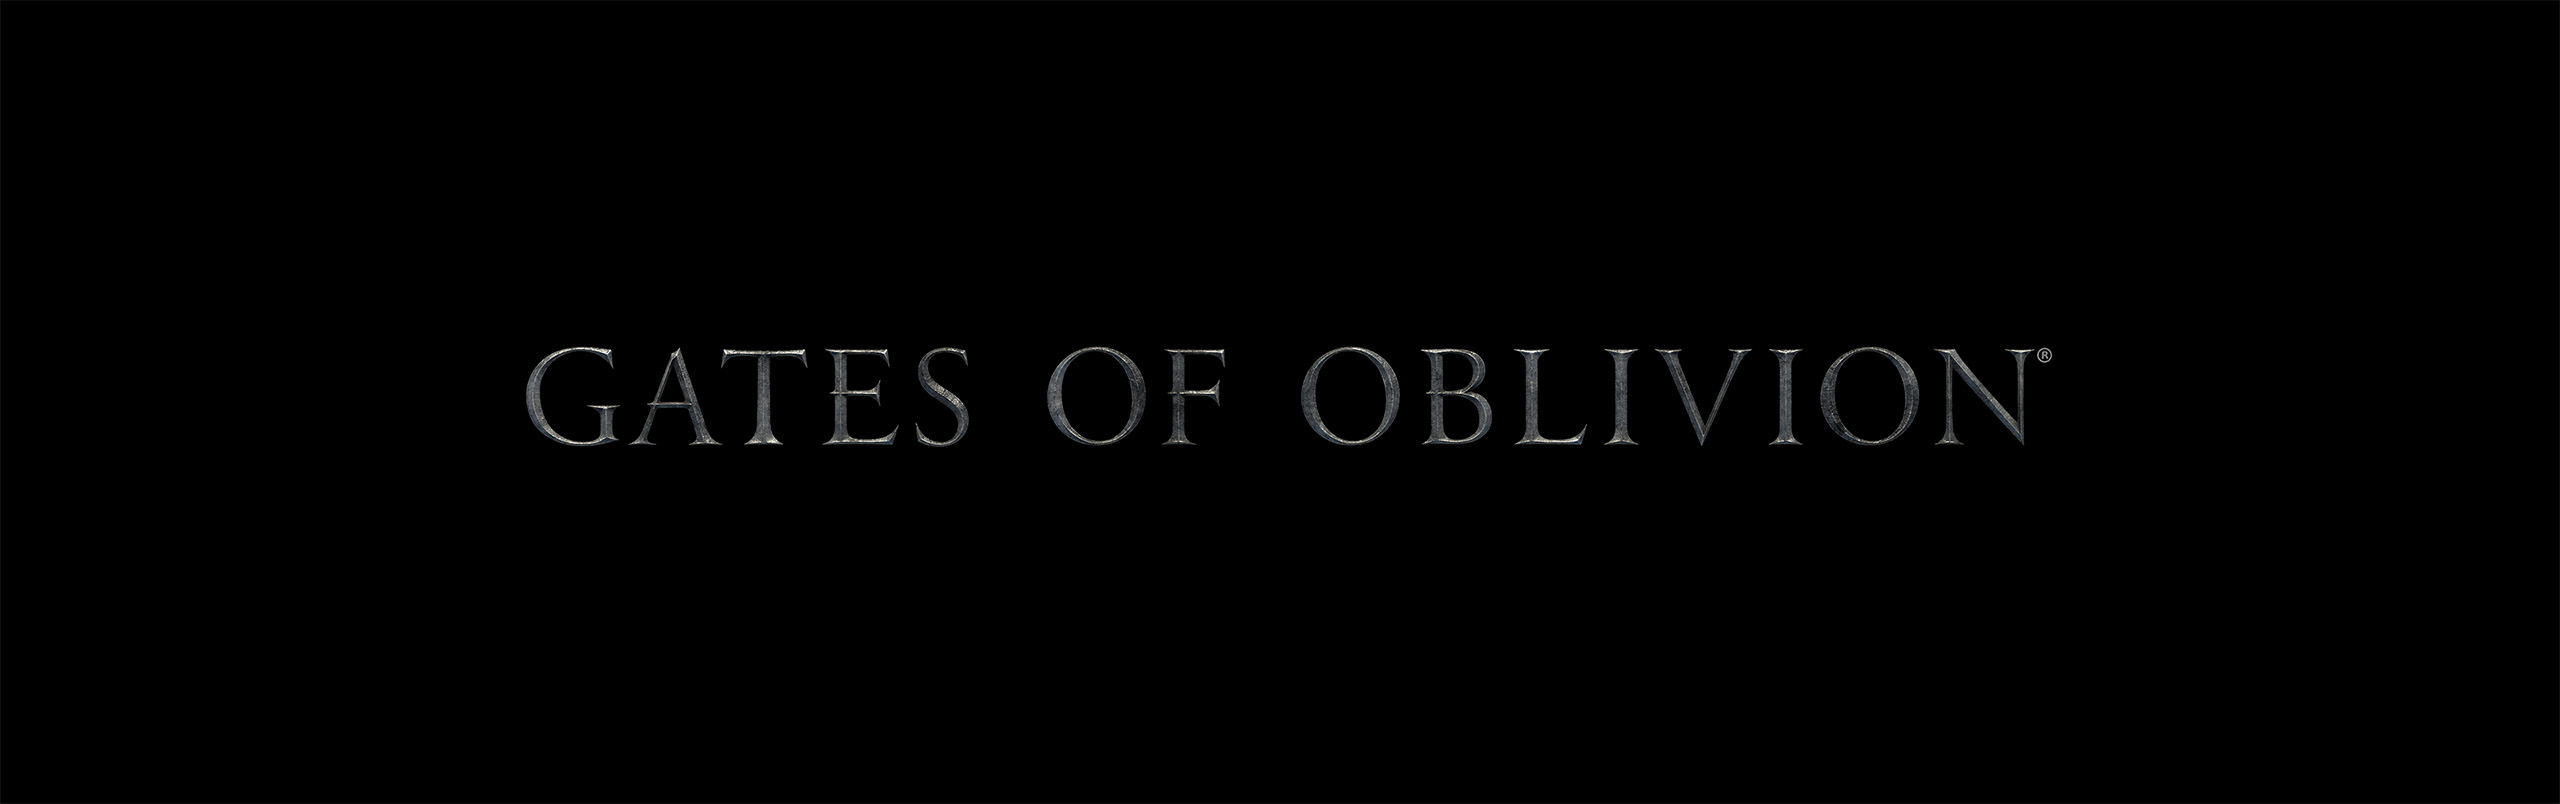 ESO_Gates of Oblivion_Logotype_Color